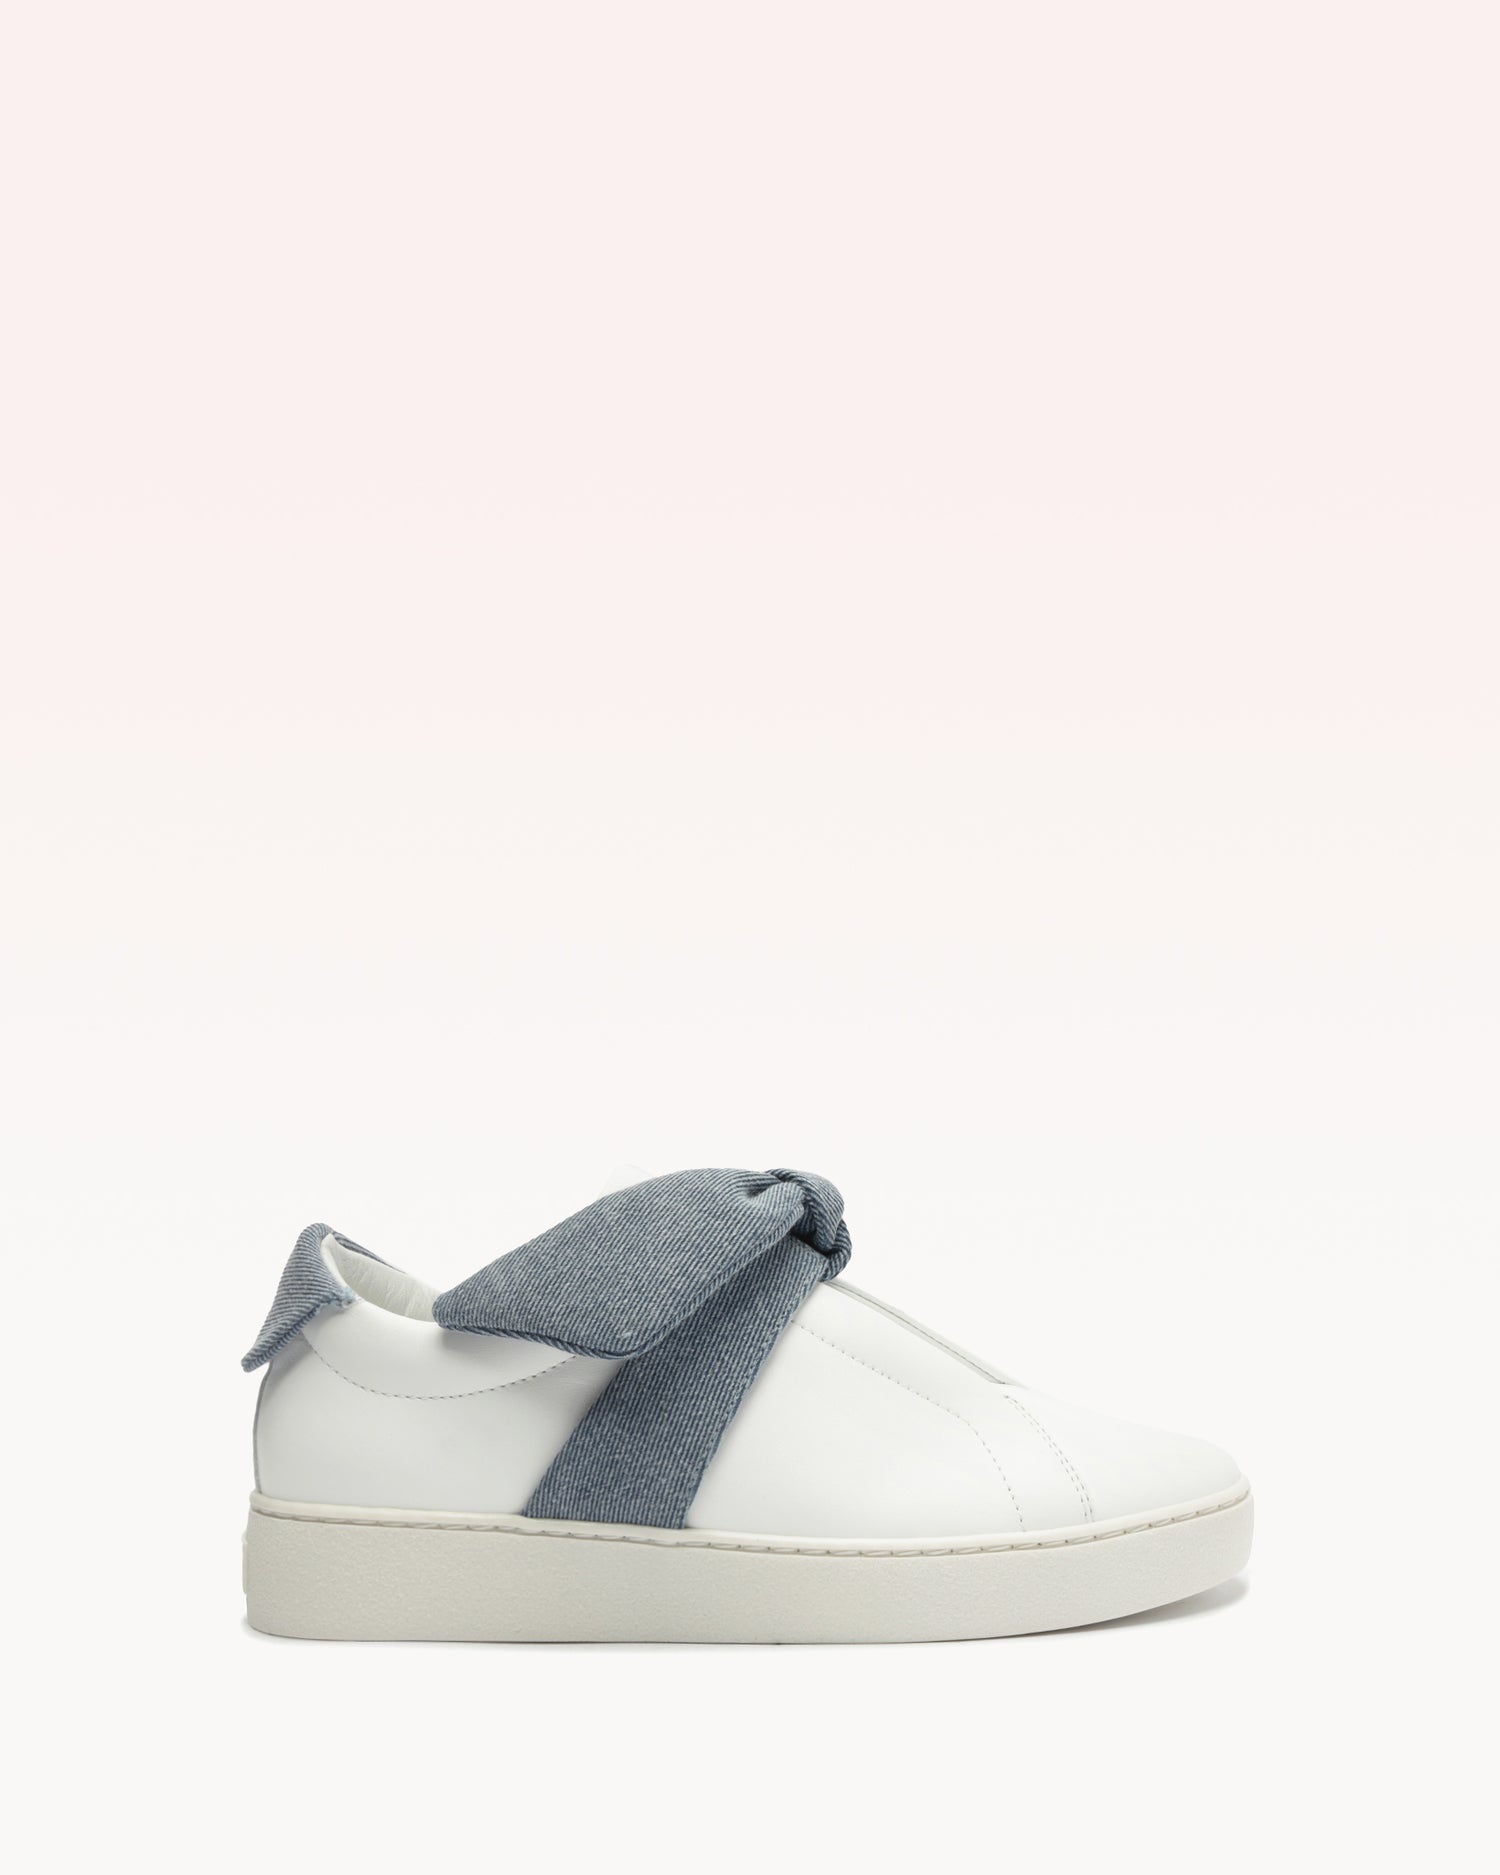 Asymmetric Clarita Sneaker Denim Sneakerss Spring23 35 White & Denim Leather